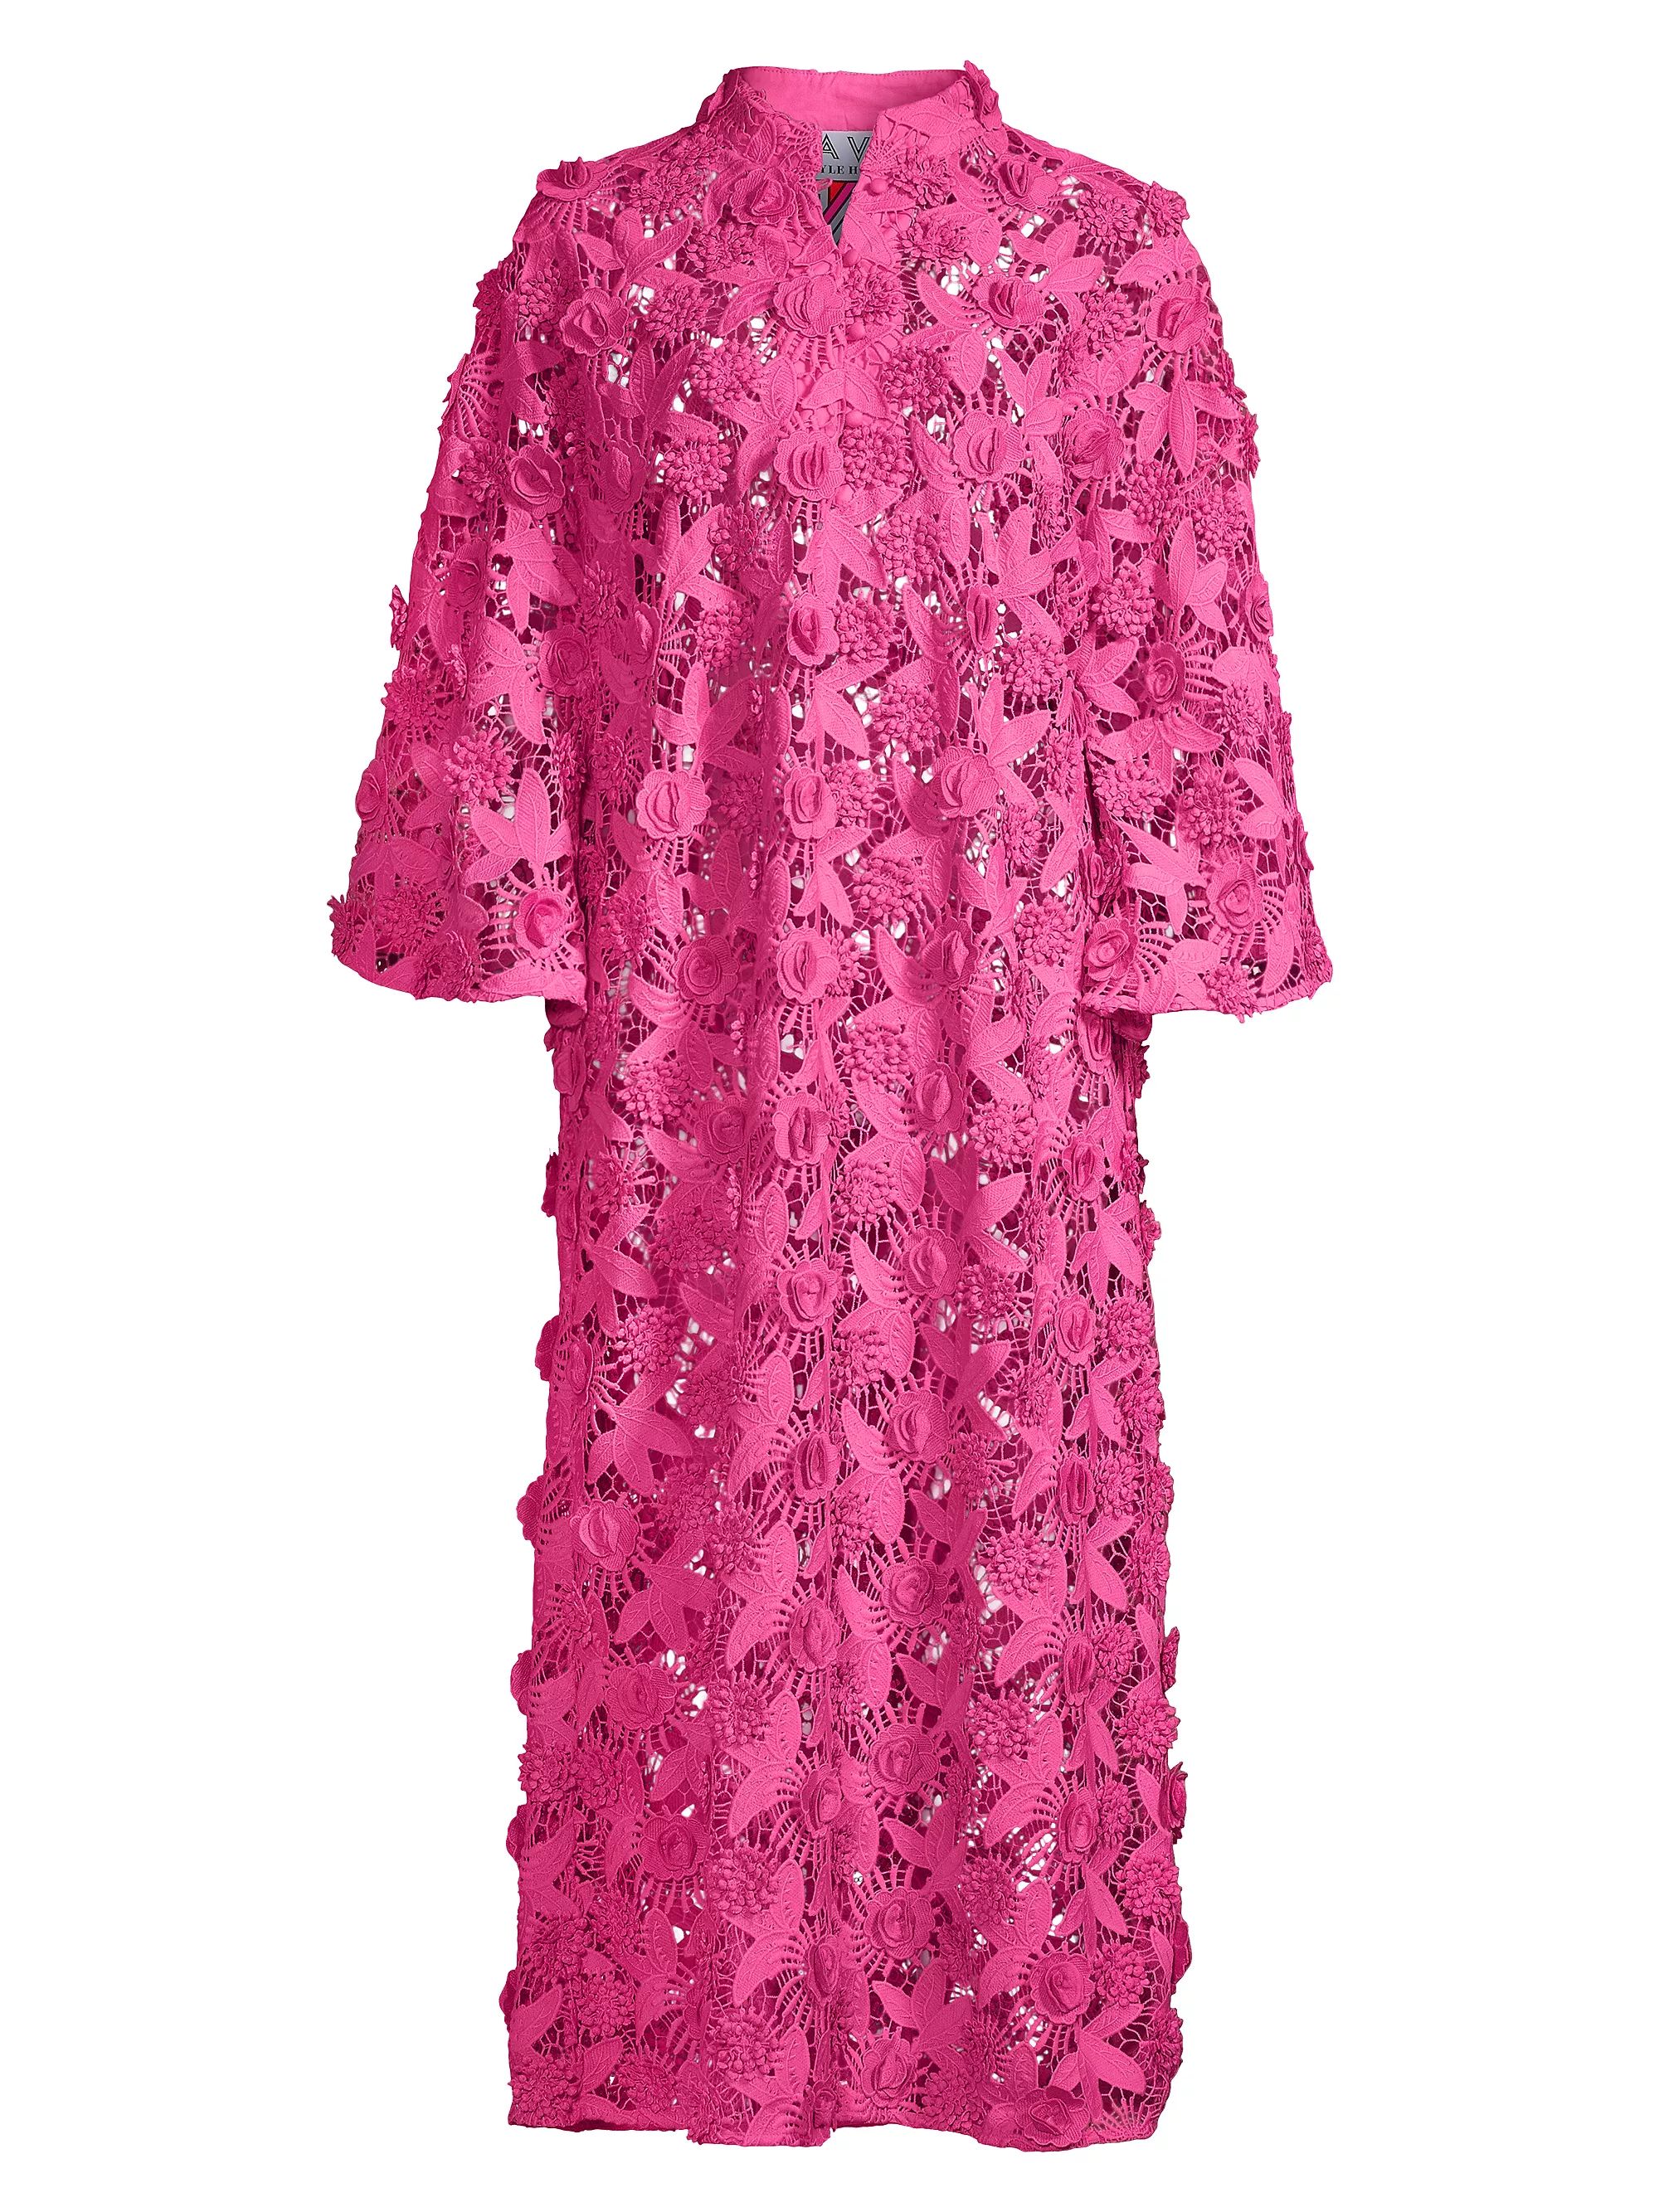 '70s Floral Lace Maxi Caftan Dress | Saks Fifth Avenue